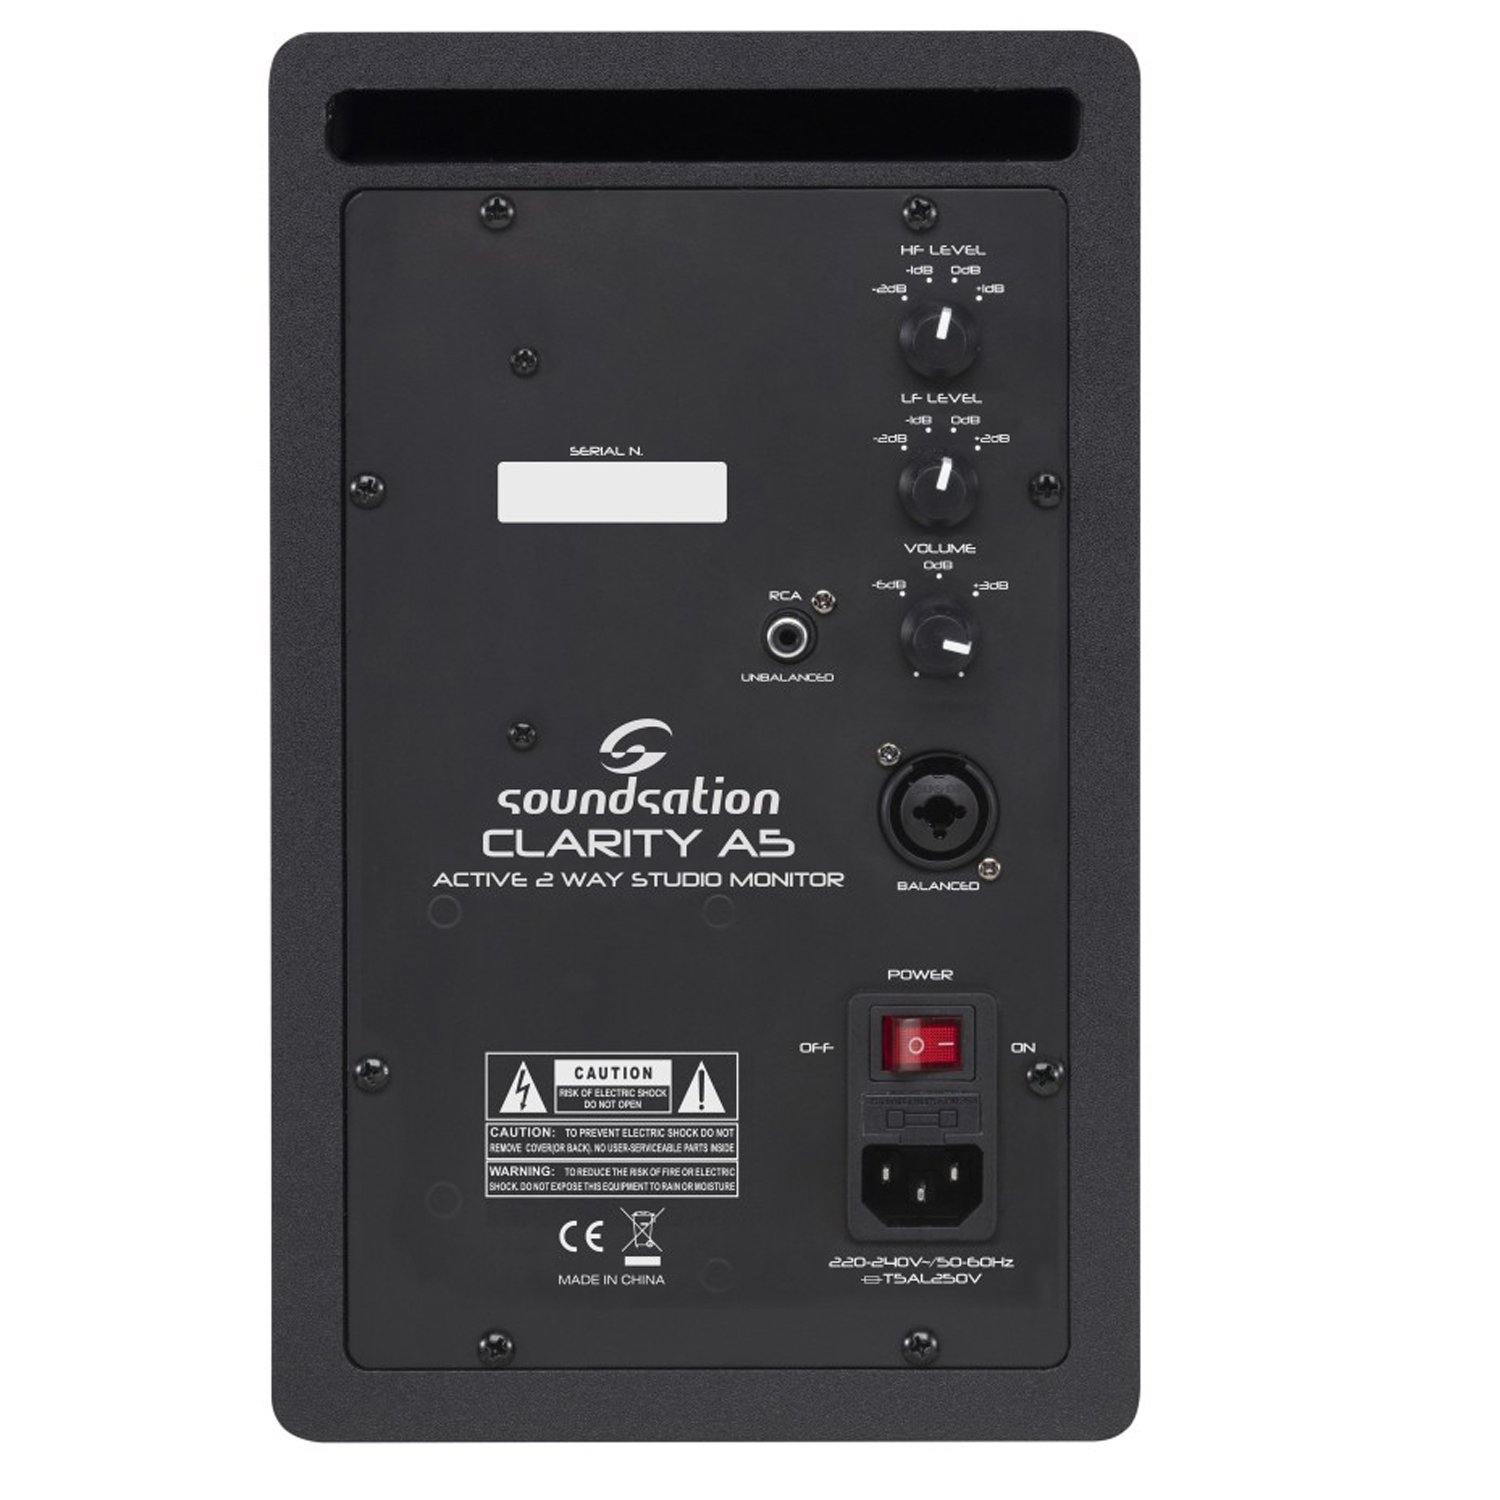 2 x Soundsation Clarirty A5 5.25" Studio Monitor Black - DY Pro Audio